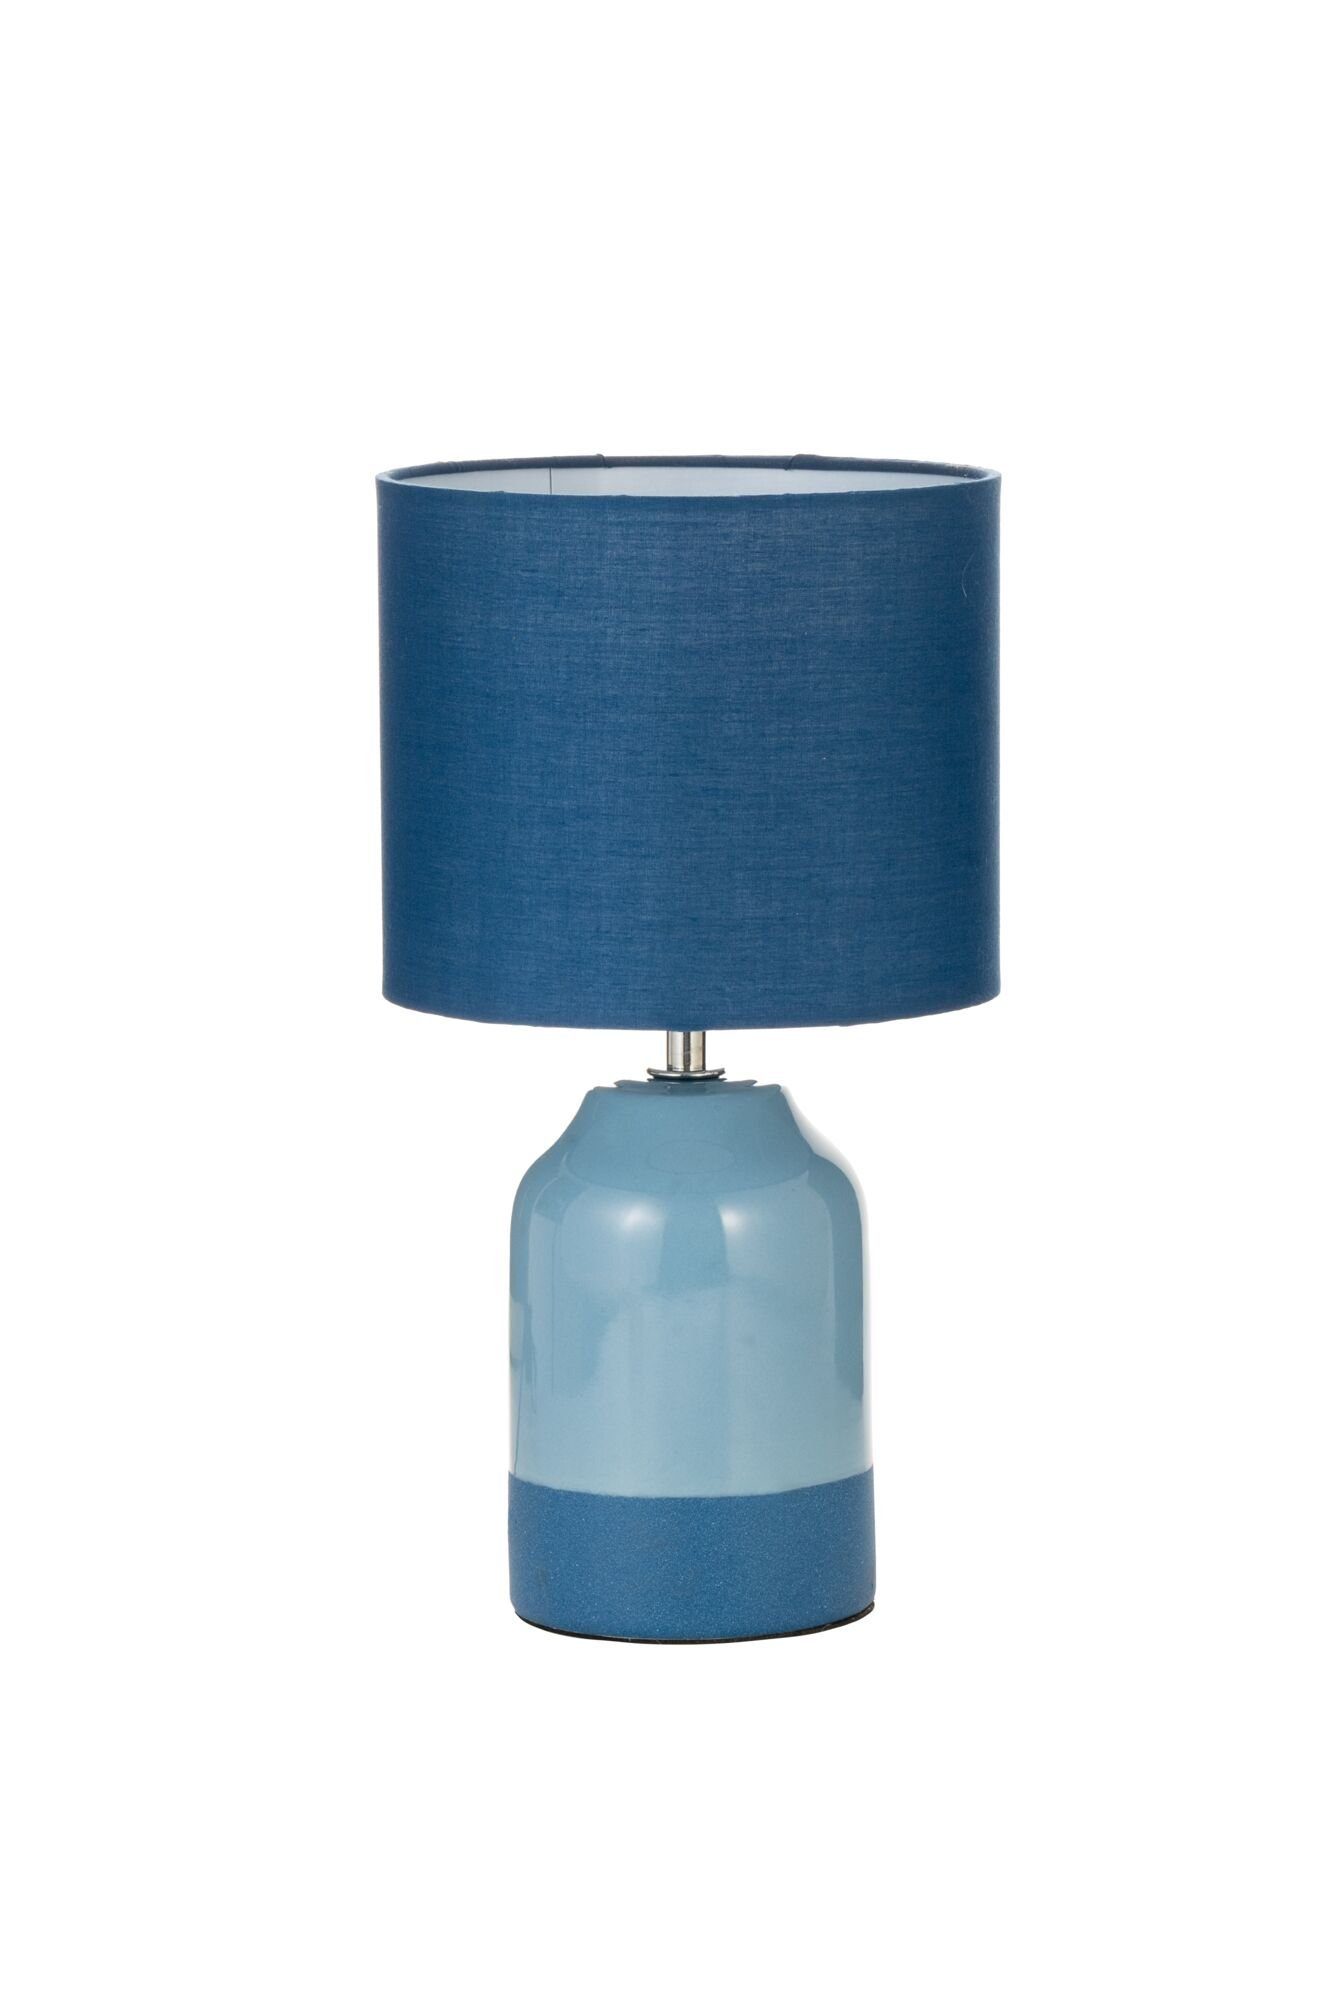 Pauleen Tischleuchte Sandy ohne Leuchtmittel, blue 230V max20W E14 Glow Stoff/Keramik, blue